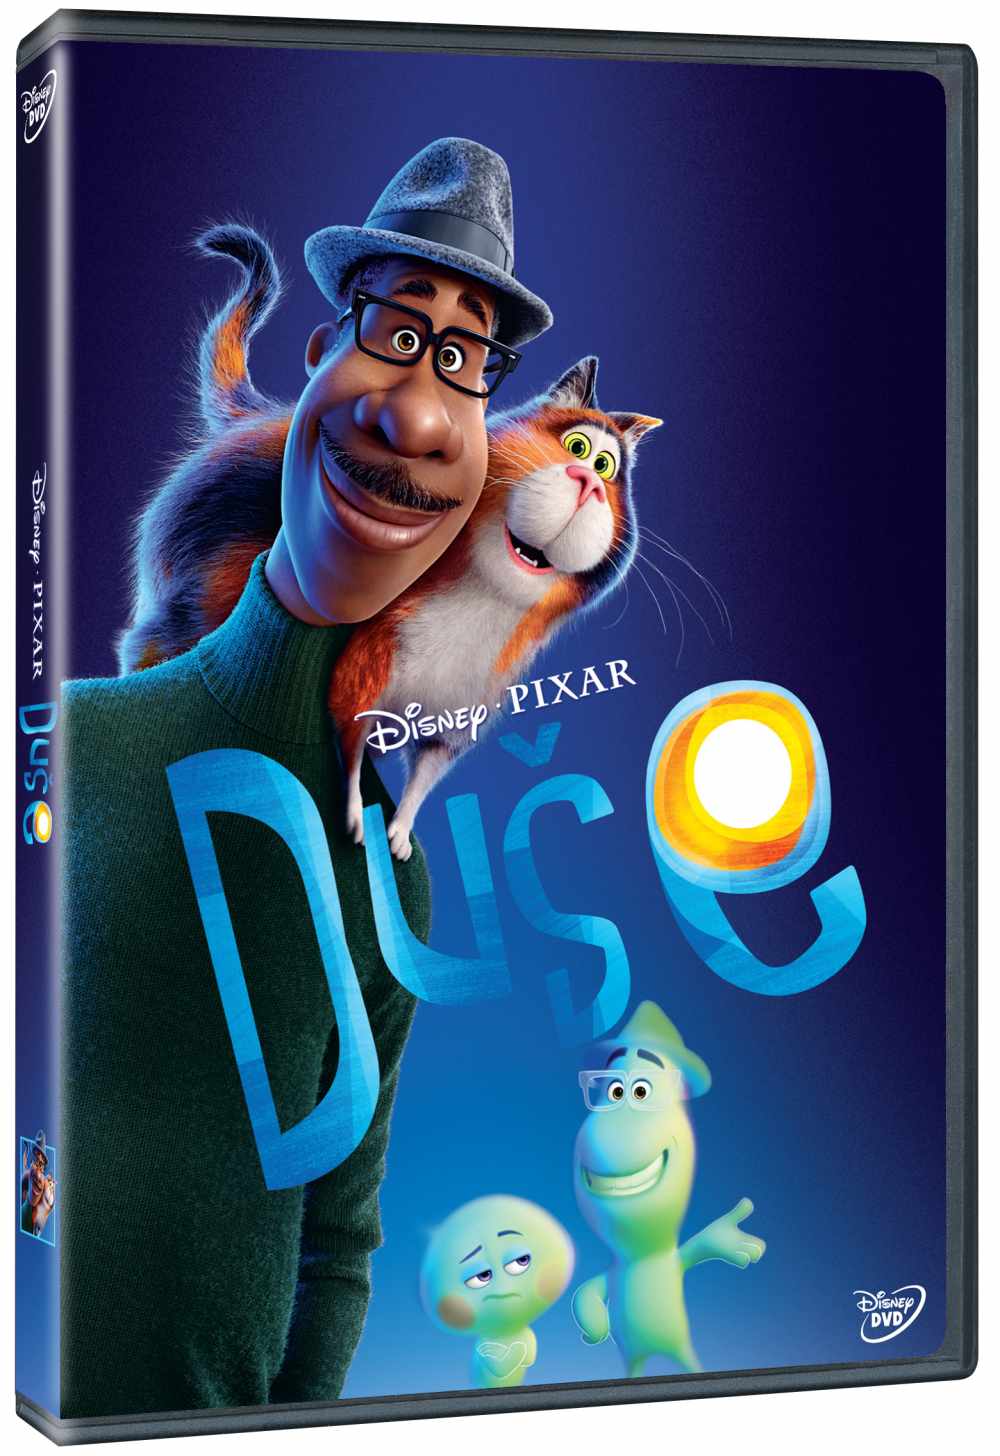 Duše - DVD